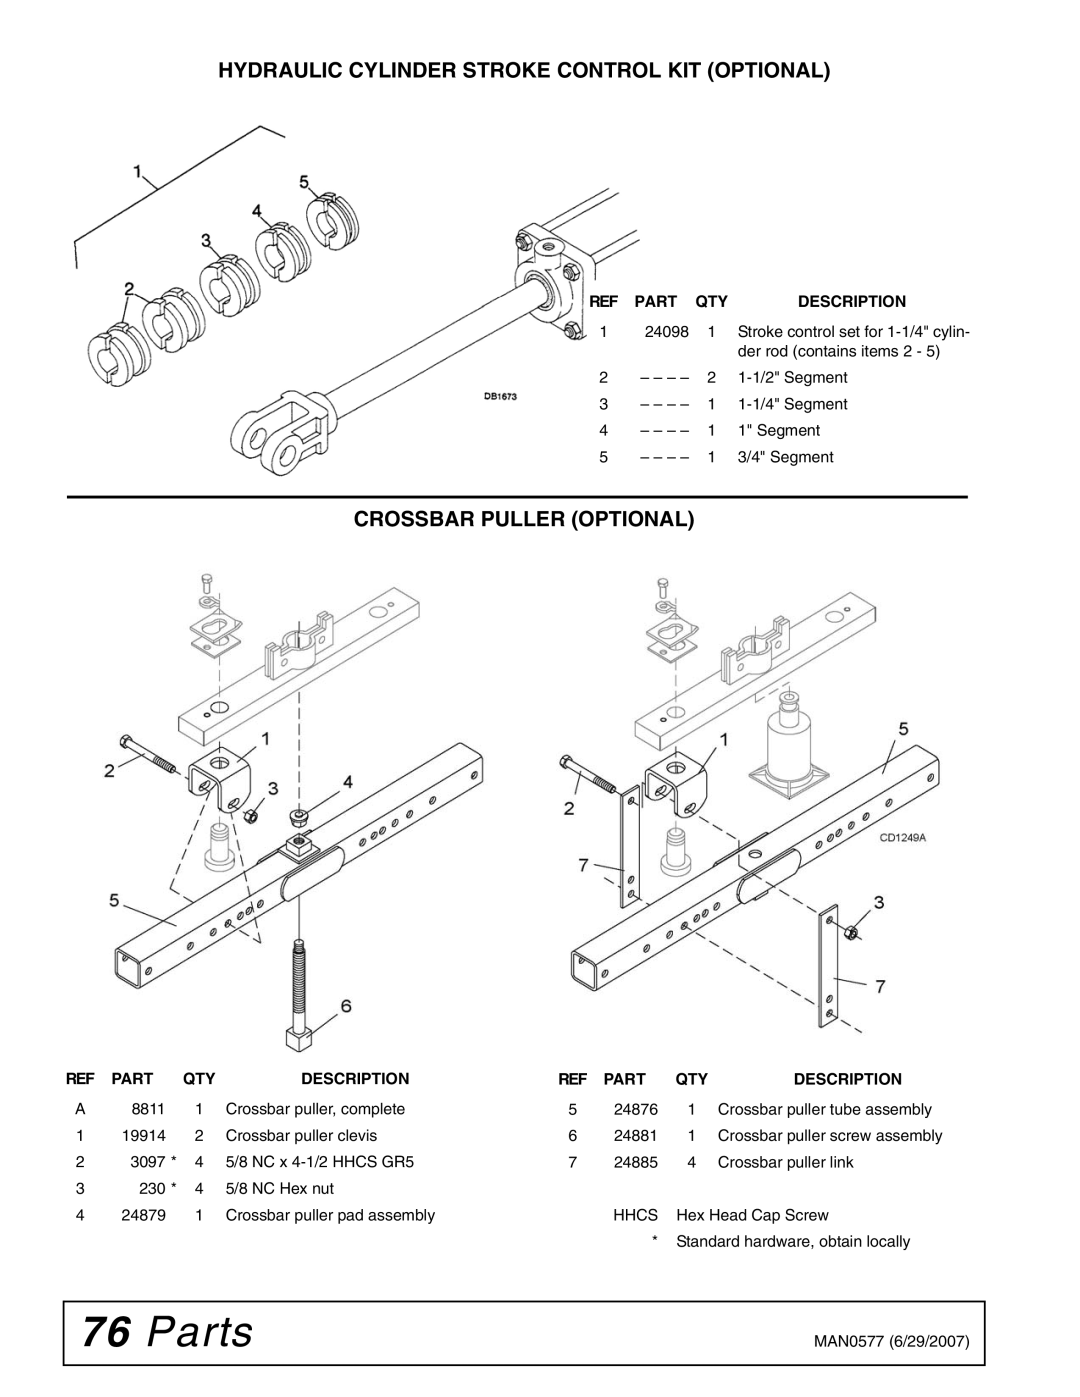 Woods Equipment TS1680Q manual Hydraulic Cylinder Stroke Control KIT Optional, Crossbar Puller Optional 